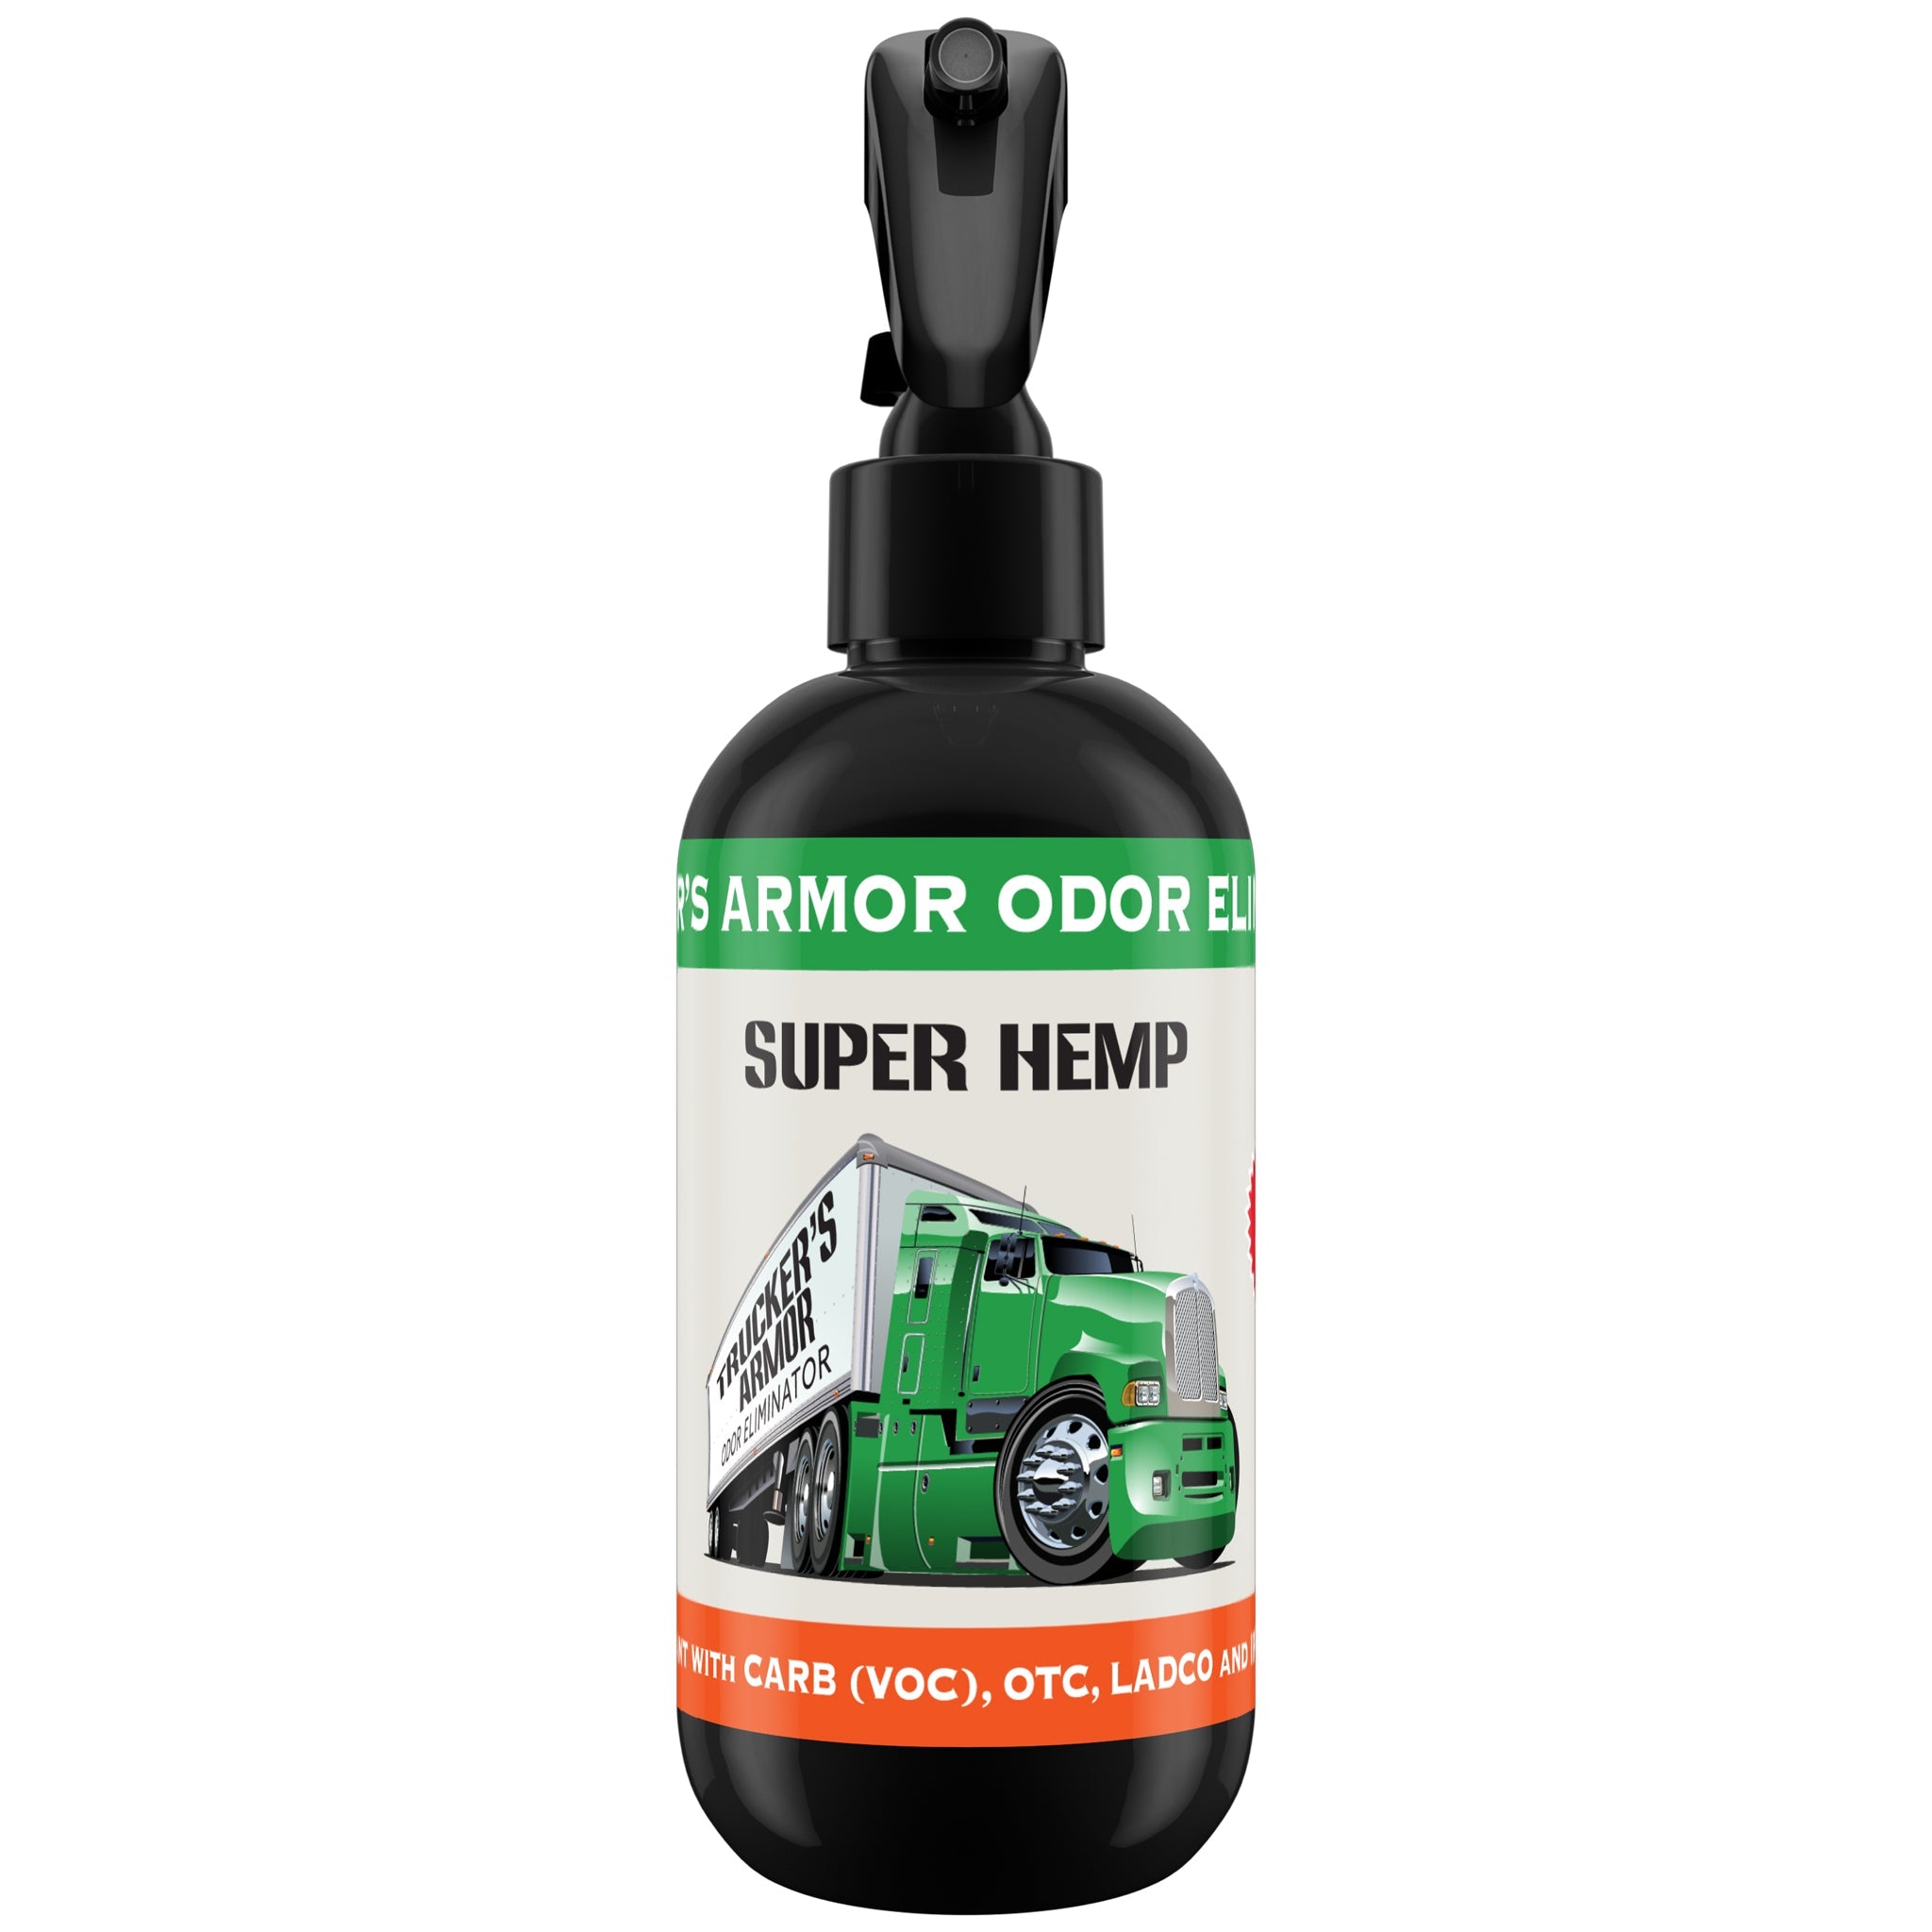 Trucker's Armor Odor Eliminator - Super Hemp Scent